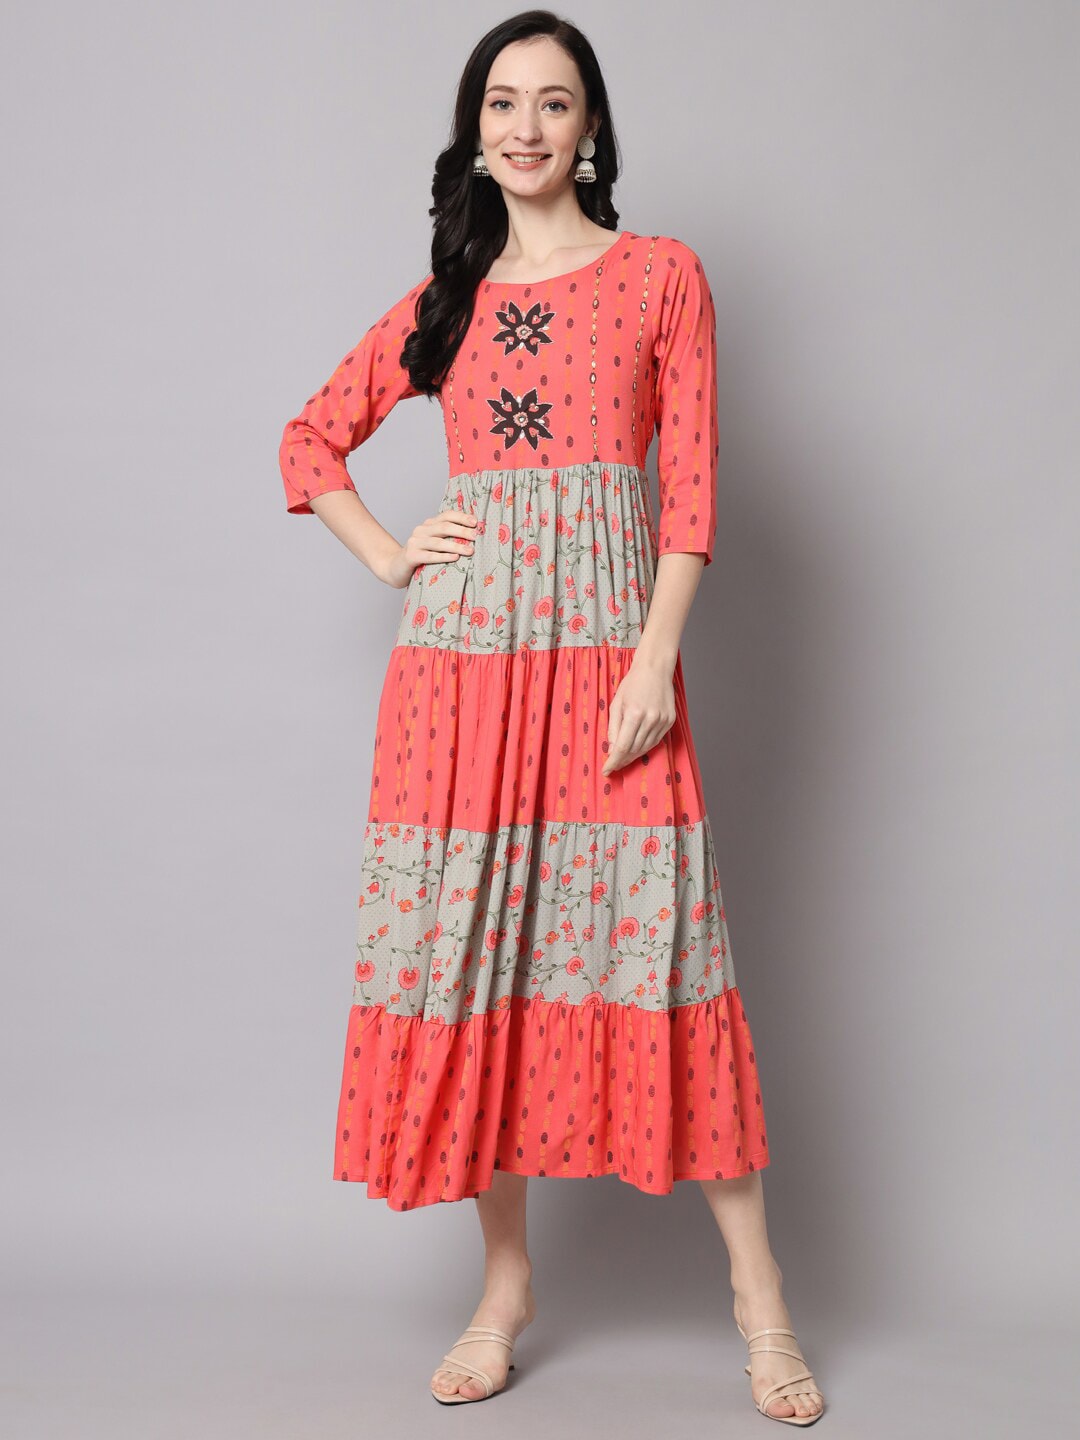 KALINI Peach-Coloured Ethnic Motifs Midi Dress Price in India